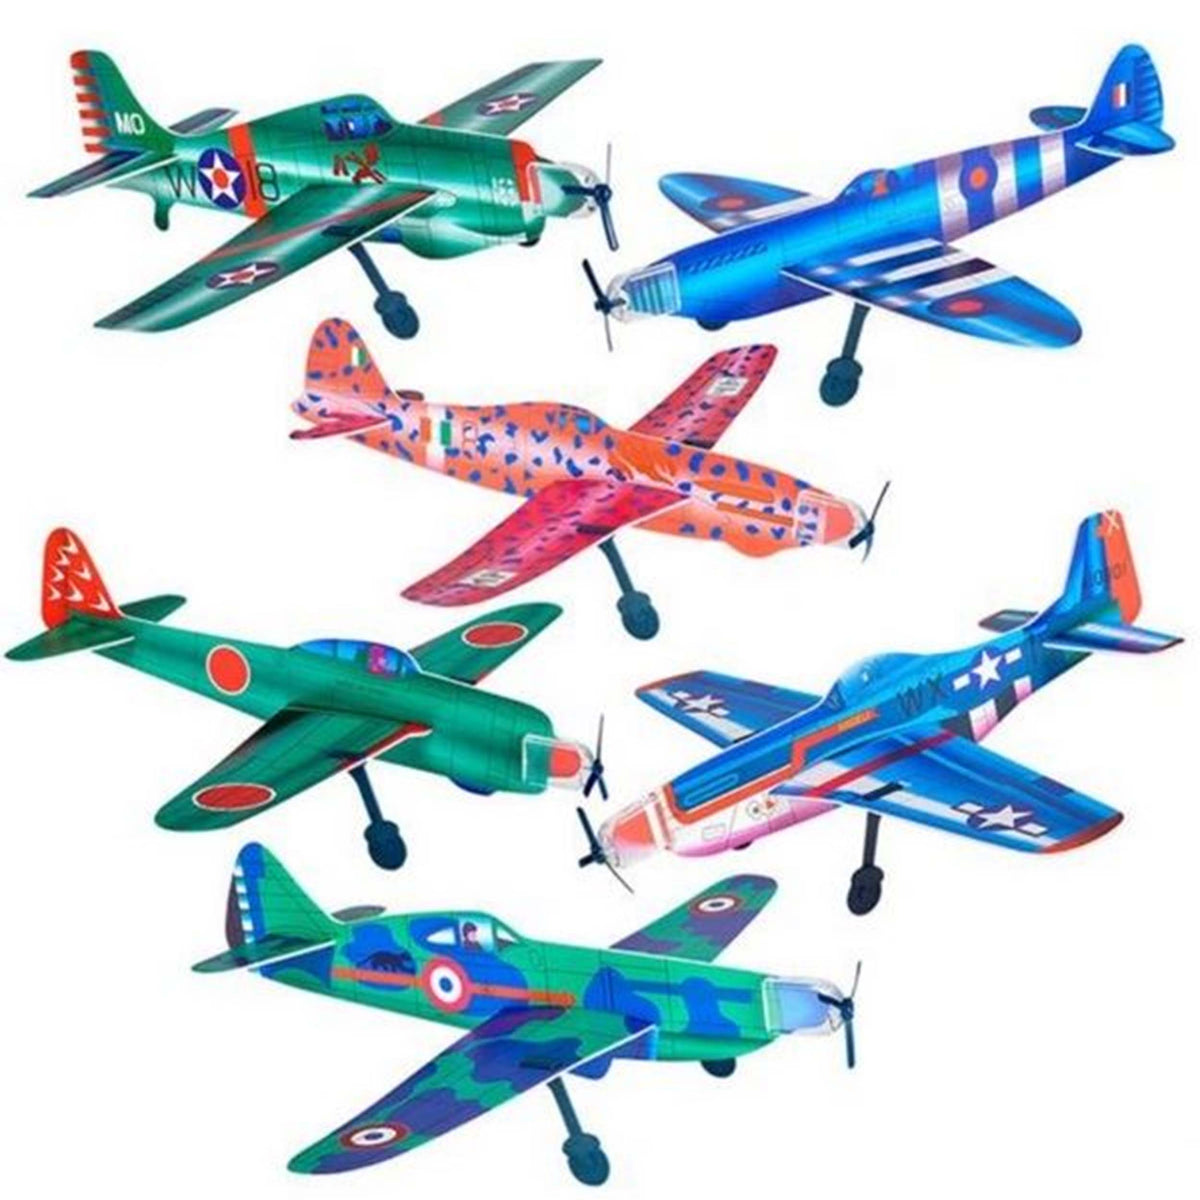 Super Glider kids Toys In Bulk- Assorted